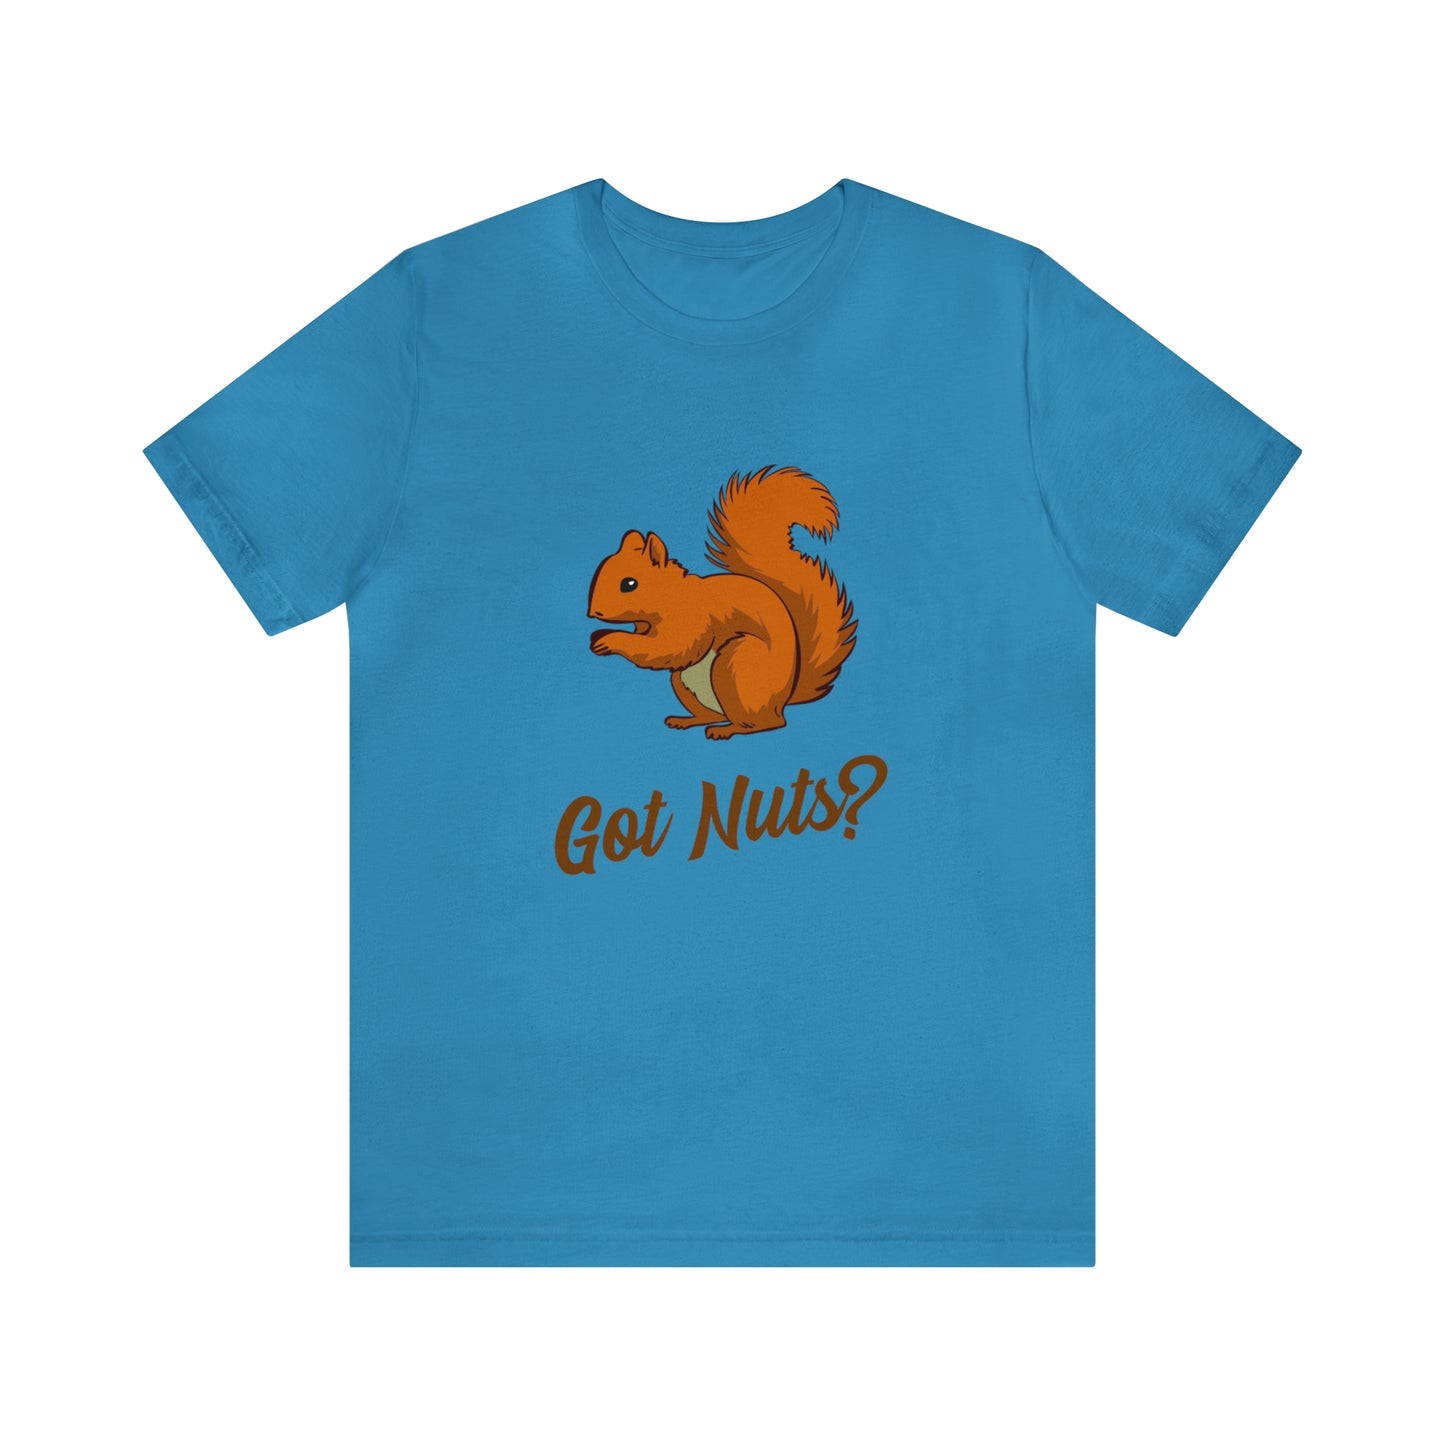 Got Nuts? 2 - Unisex T-Shirt